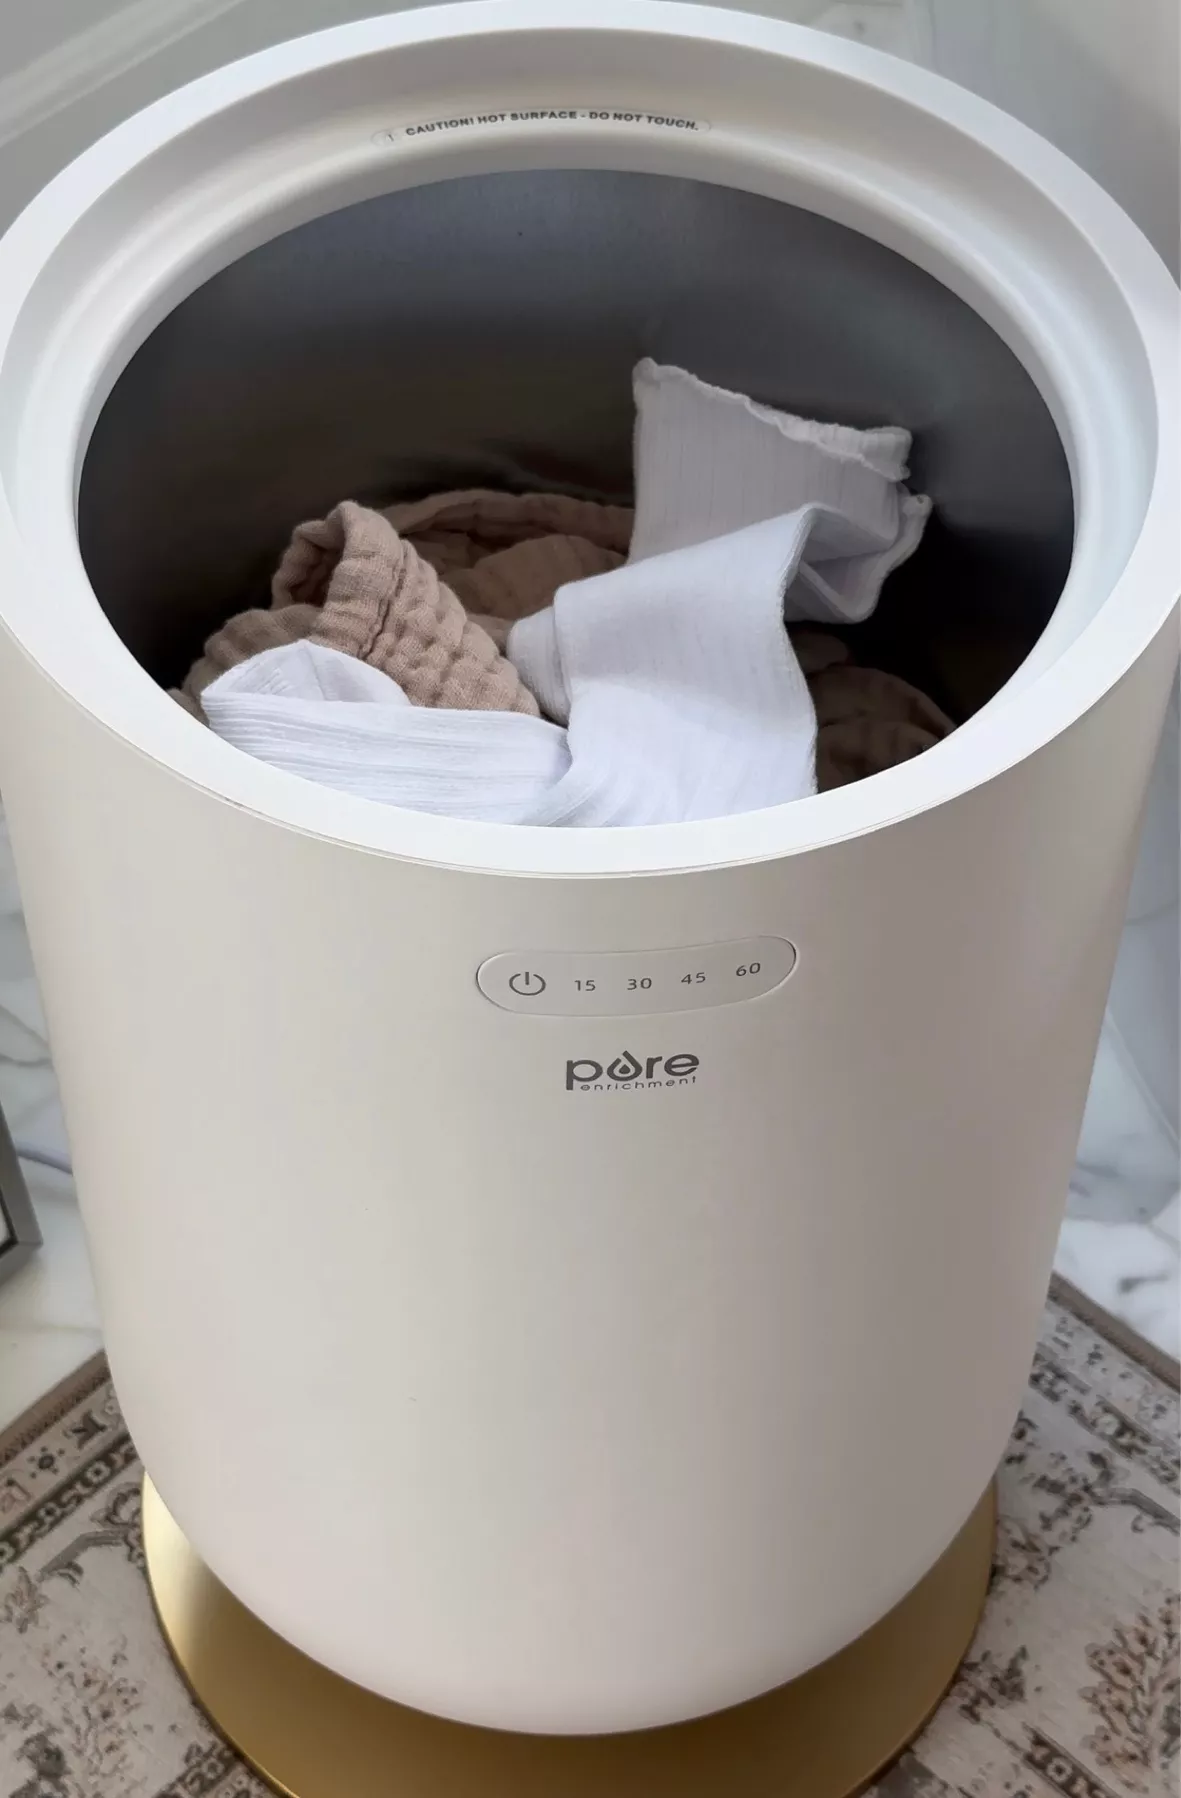 PureBliss™ Luxury Towel Warmer